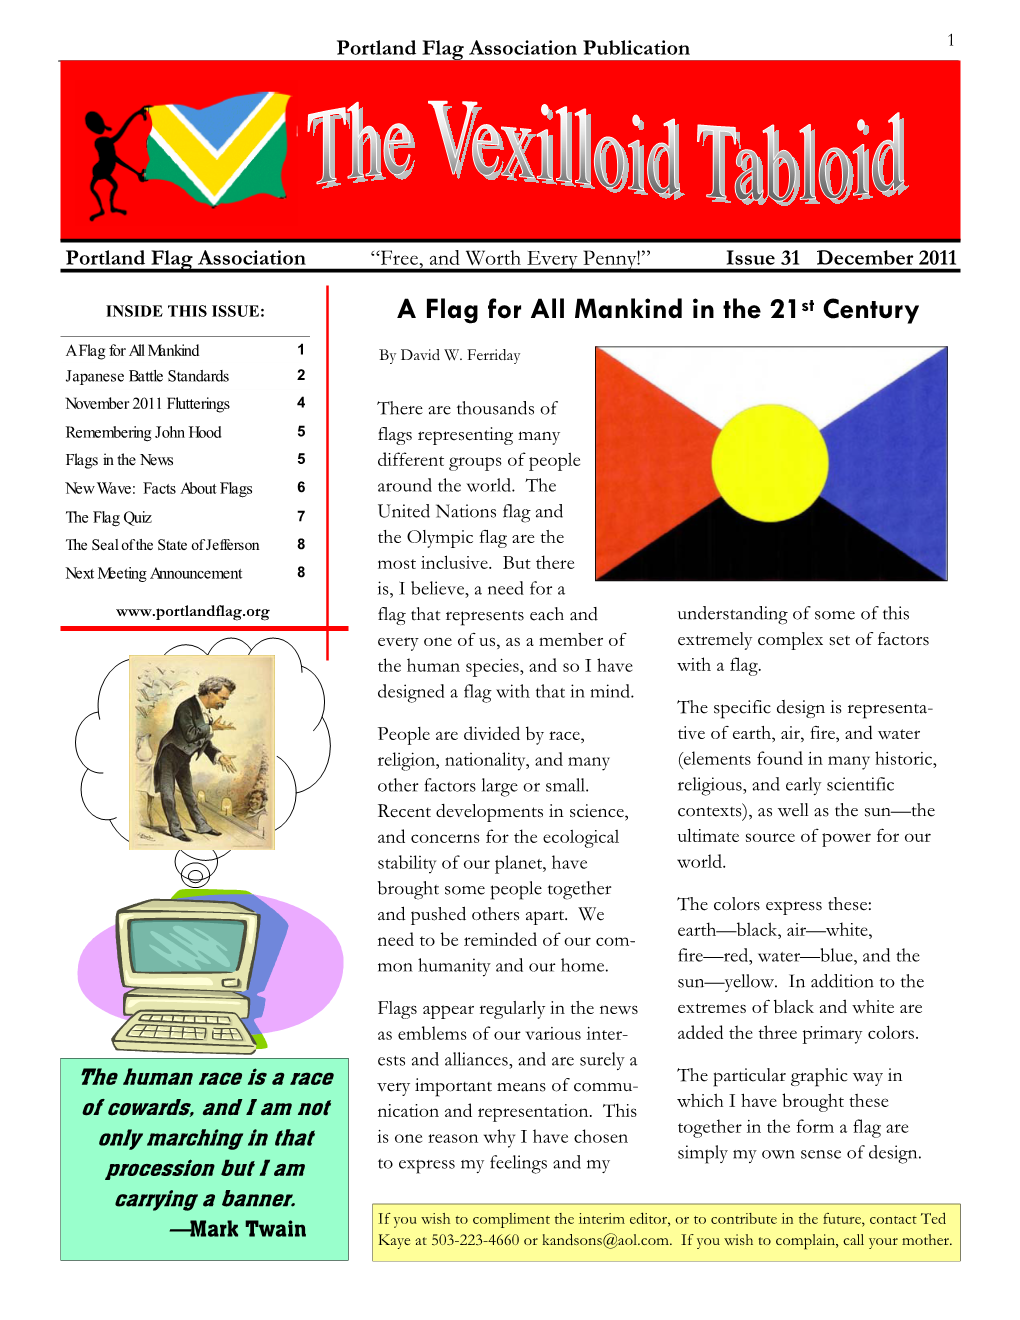 The Vexilloid Tabloid #31, December 2011